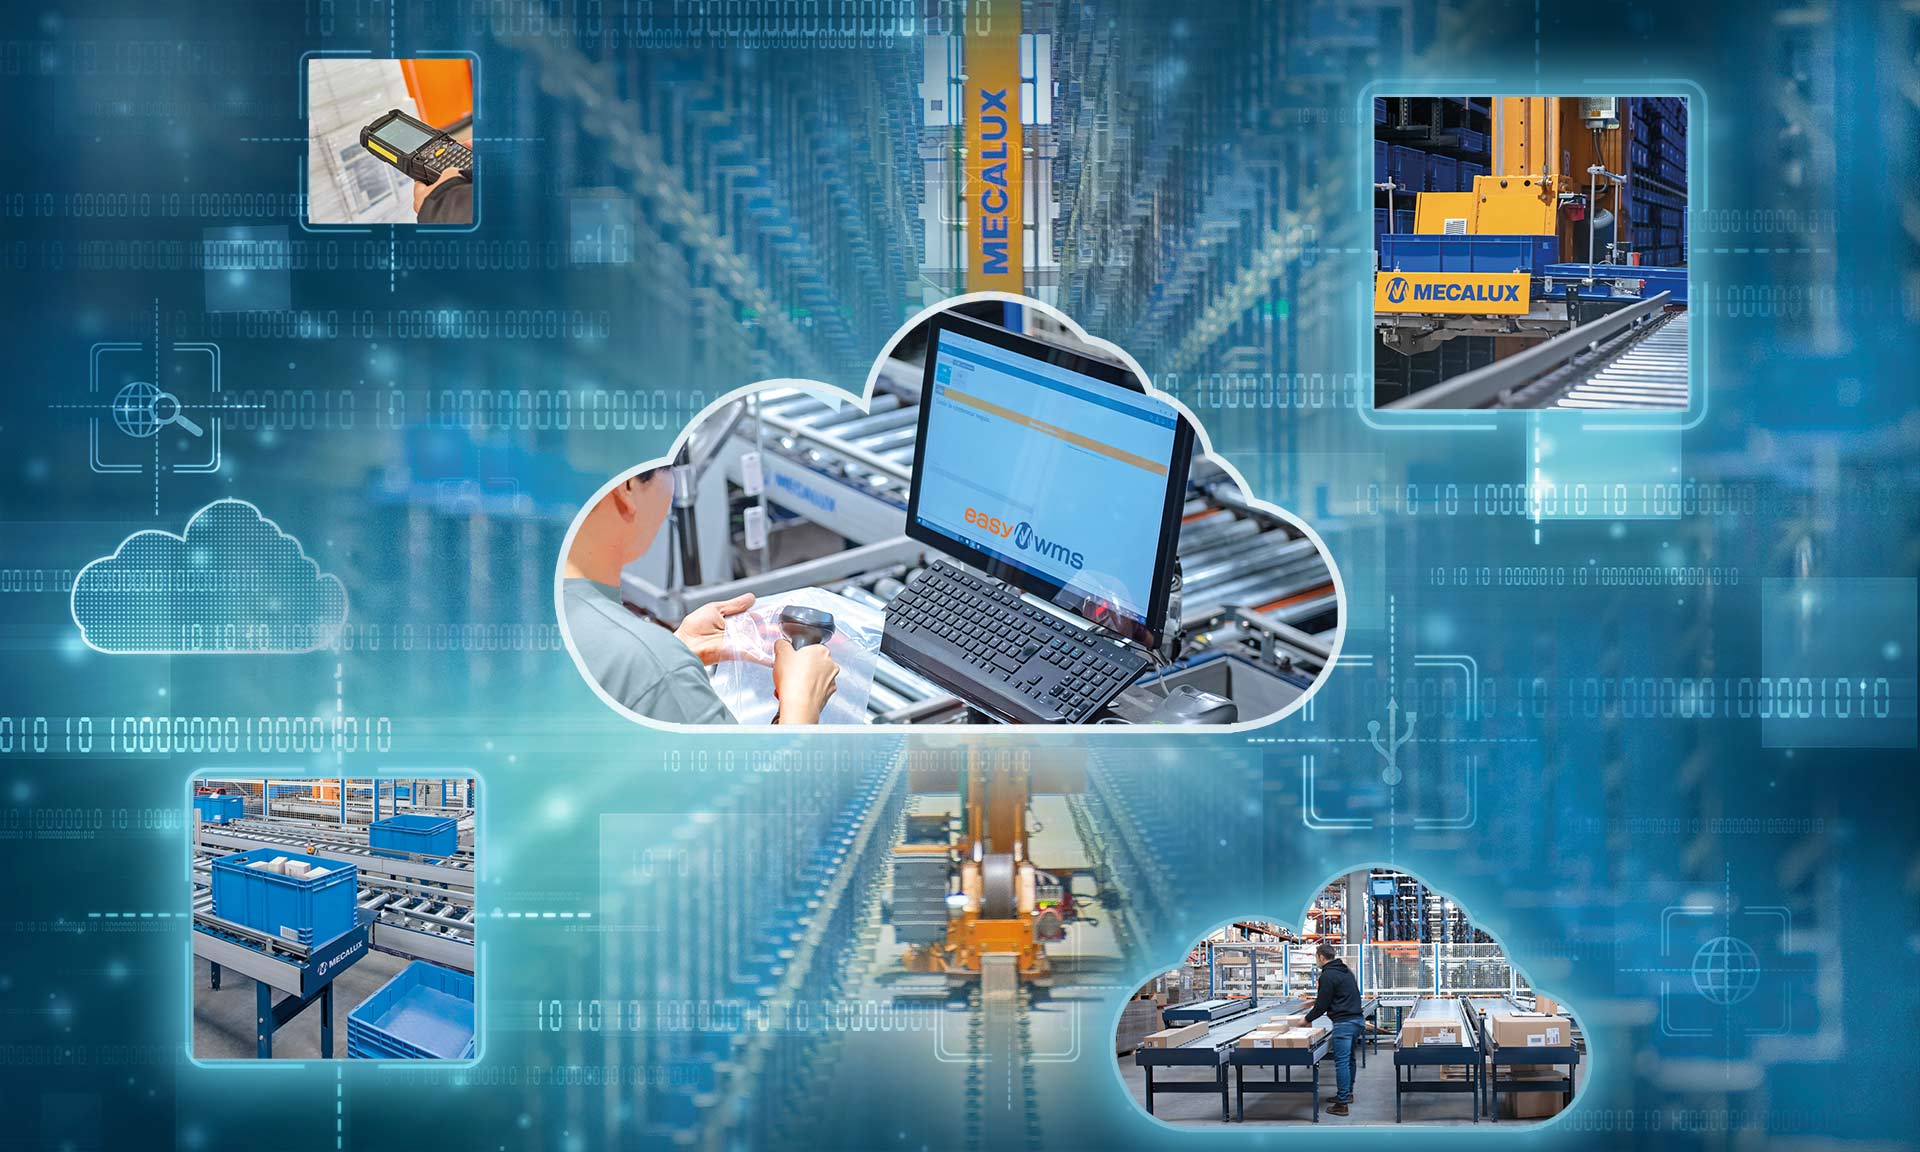 Cloud logistics uses cloud computing technology to optimize warehouse management